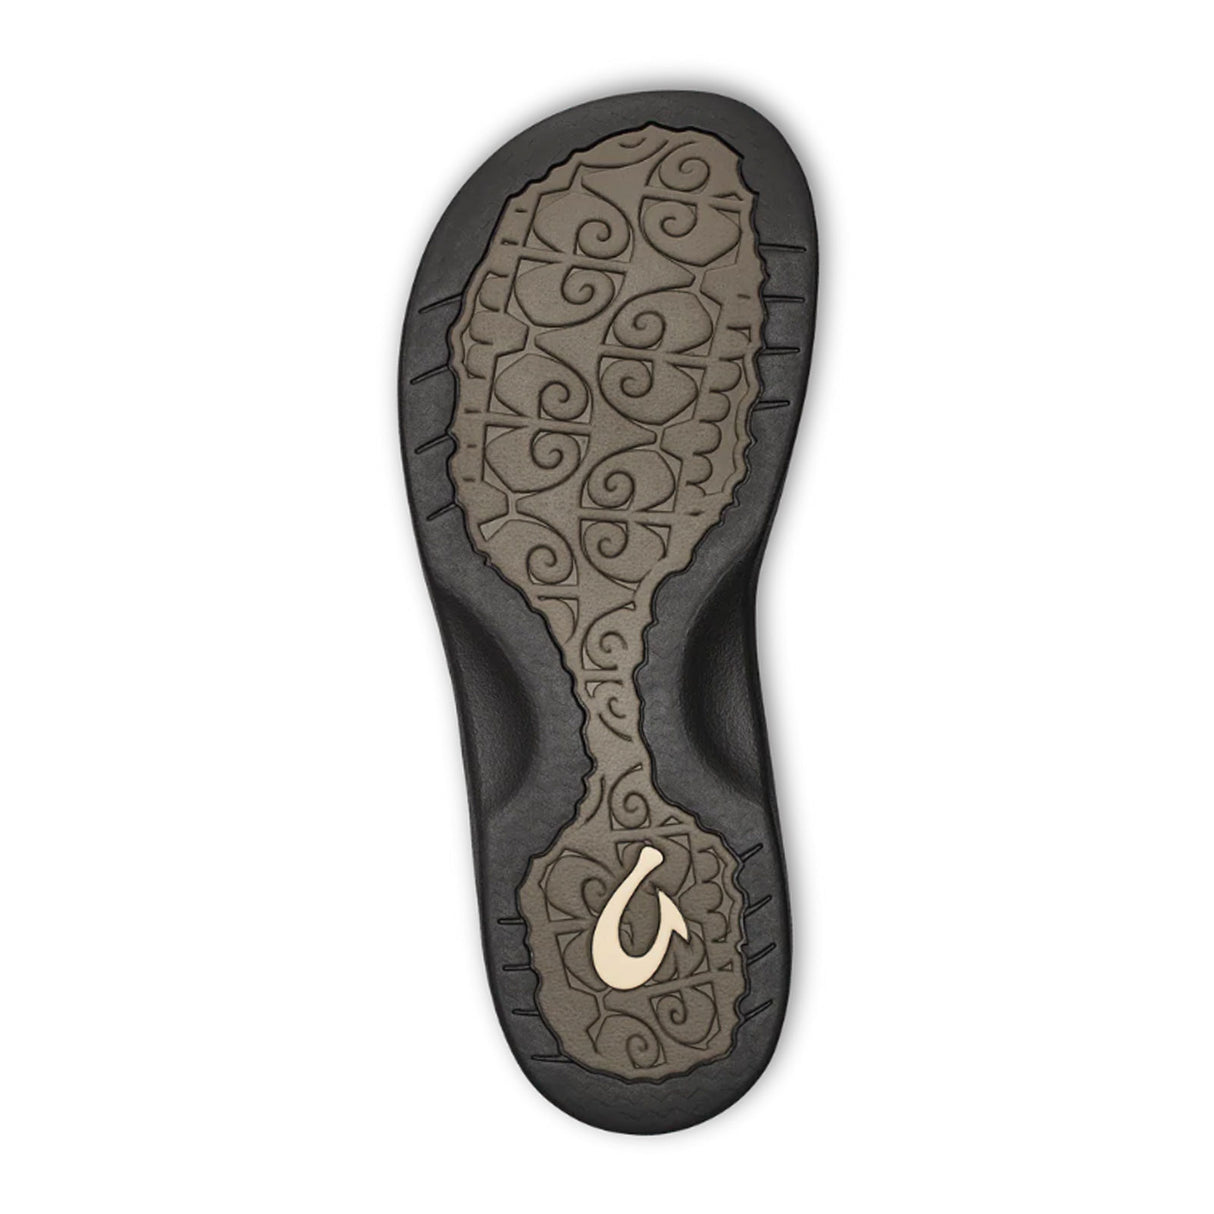 OluKai 'Ohana Sandal (Women) - Warm Taupe/Island Salt Sandals - Thong - The Heel Shoe Fitters